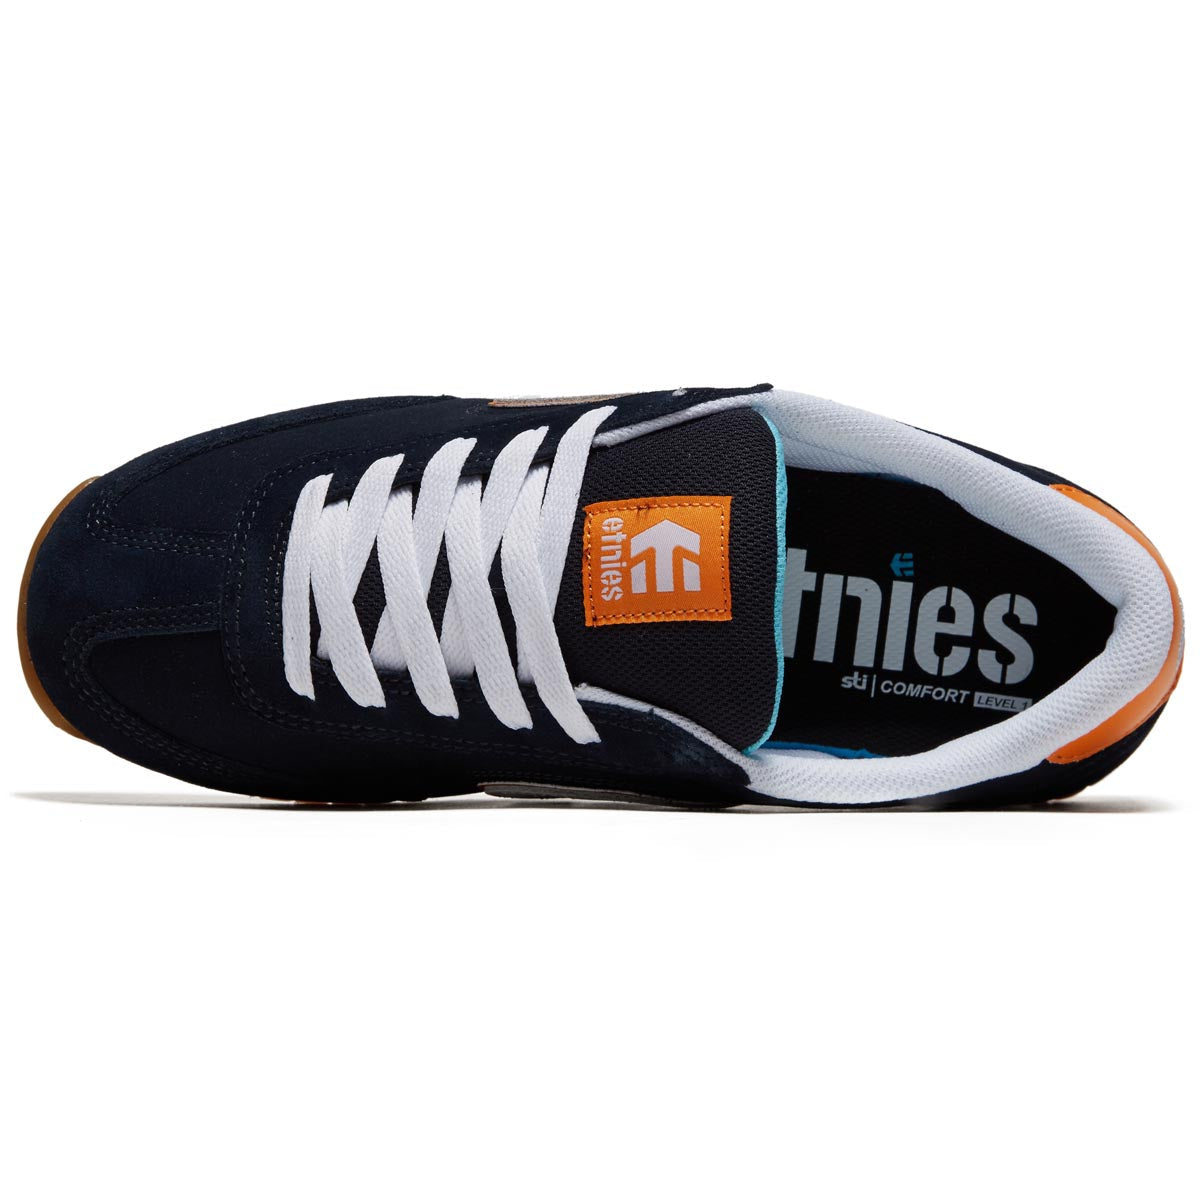 Etnies Lo-cut Ii Ls Shoes - Navy/Orange/White image 3